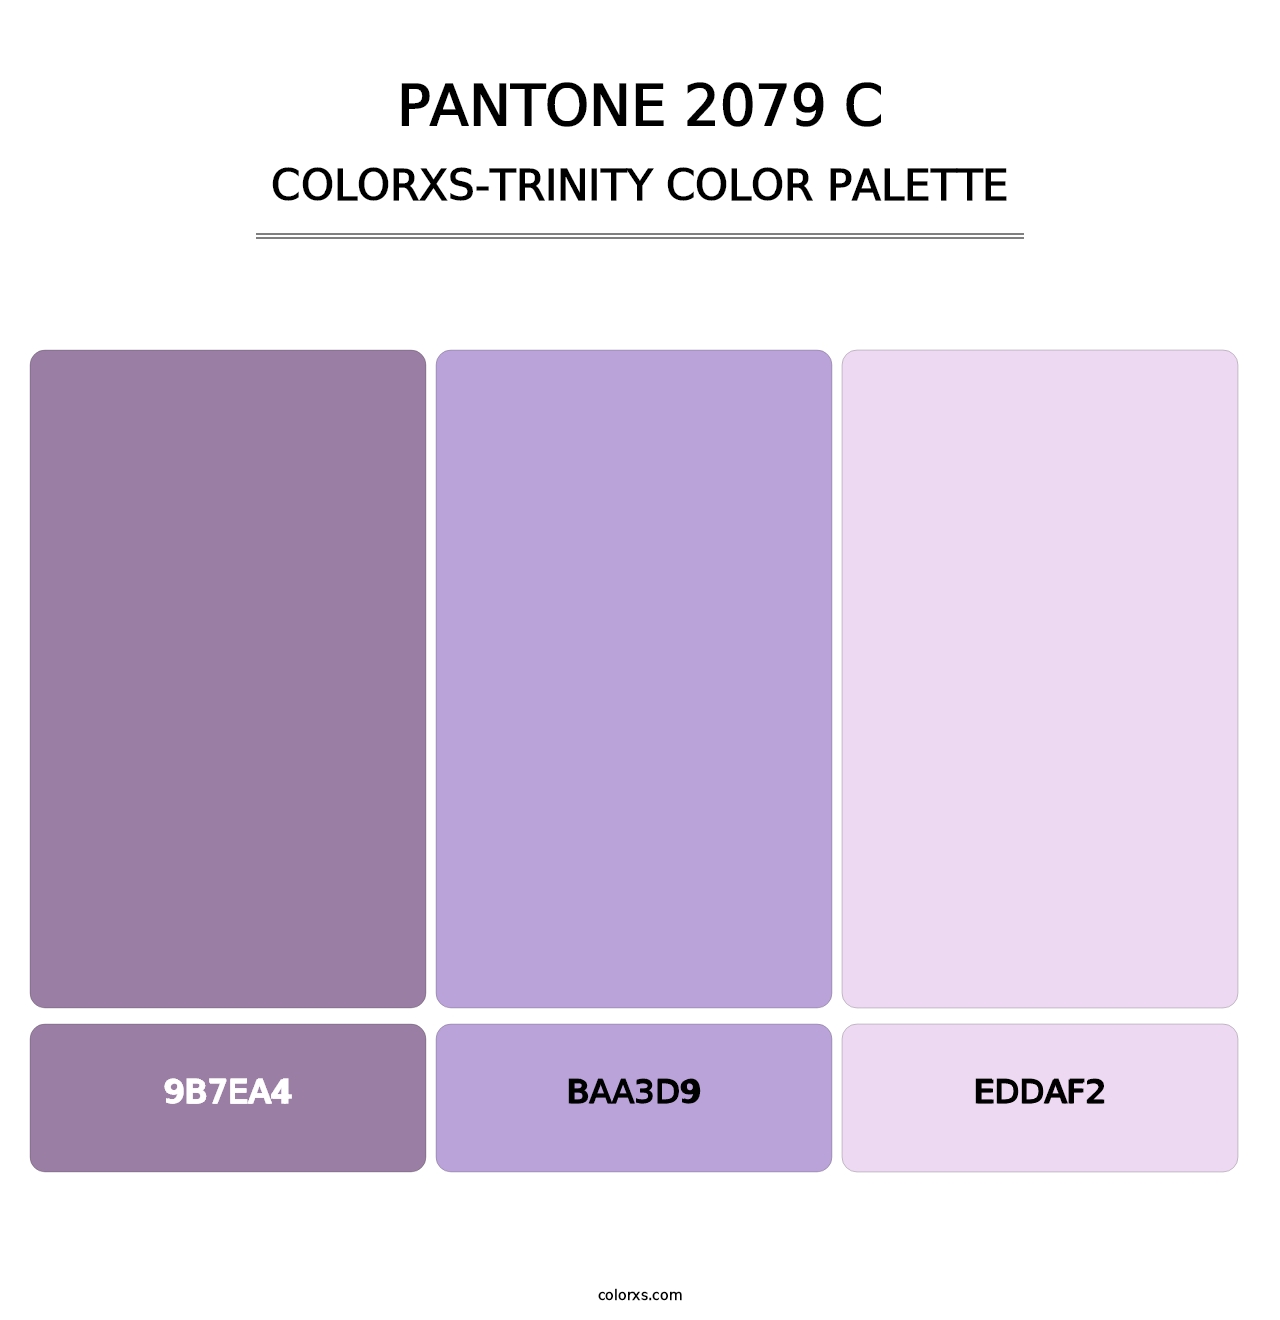 PANTONE 2079 C - Colorxs Trinity Palette